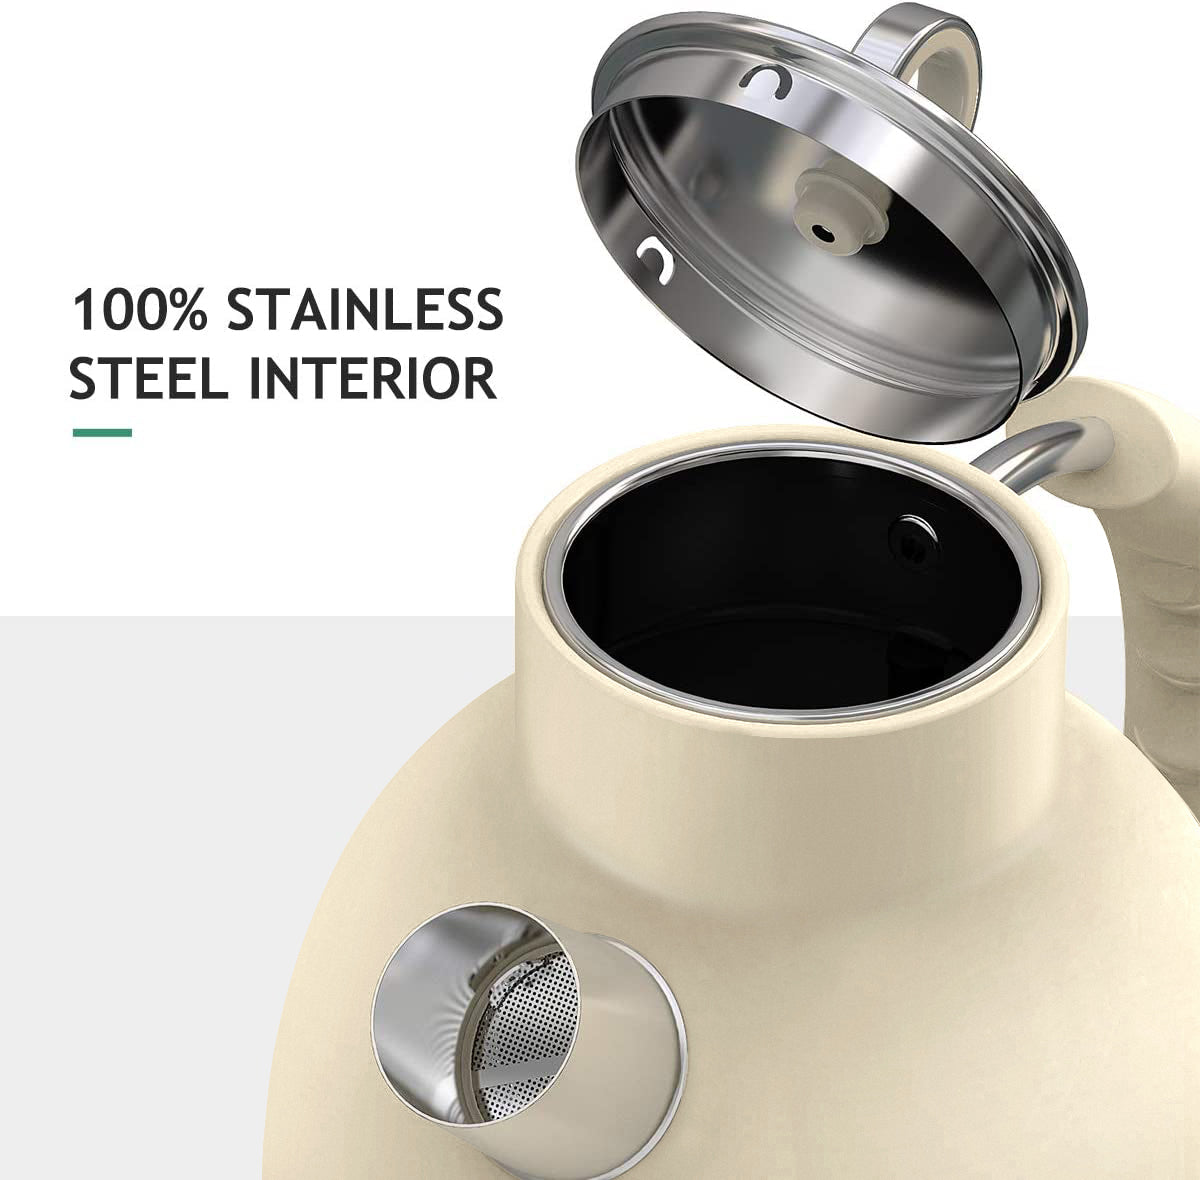 ASCOT Electric Kettle Stainless Steel Tea Kettle,1.5L(K1-Cream)